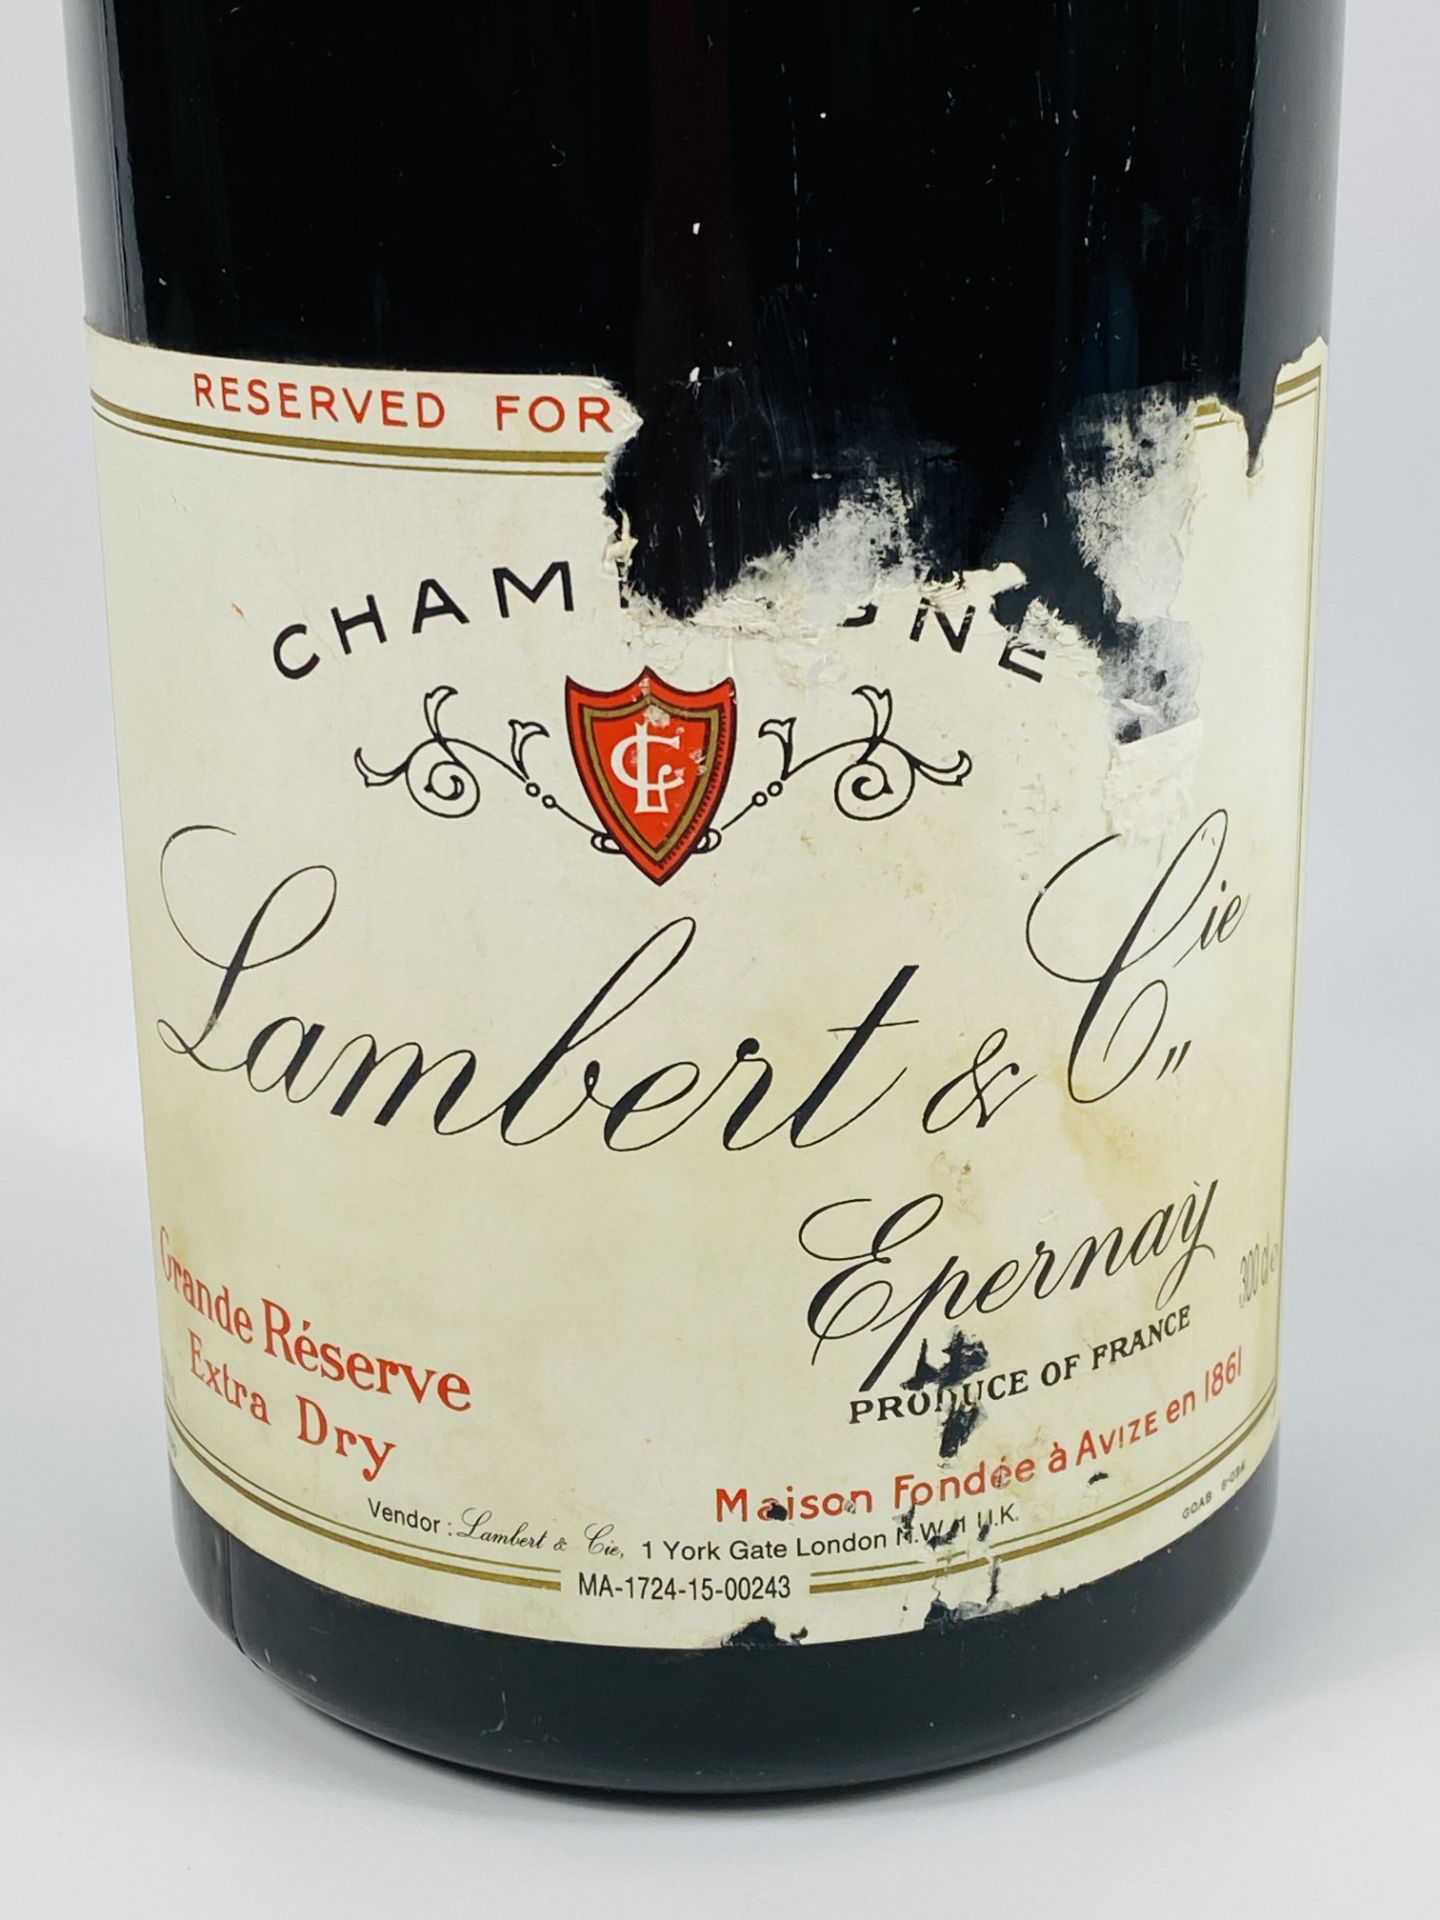 Jeroboam of Lambert & Cie champagne - Image 2 of 4